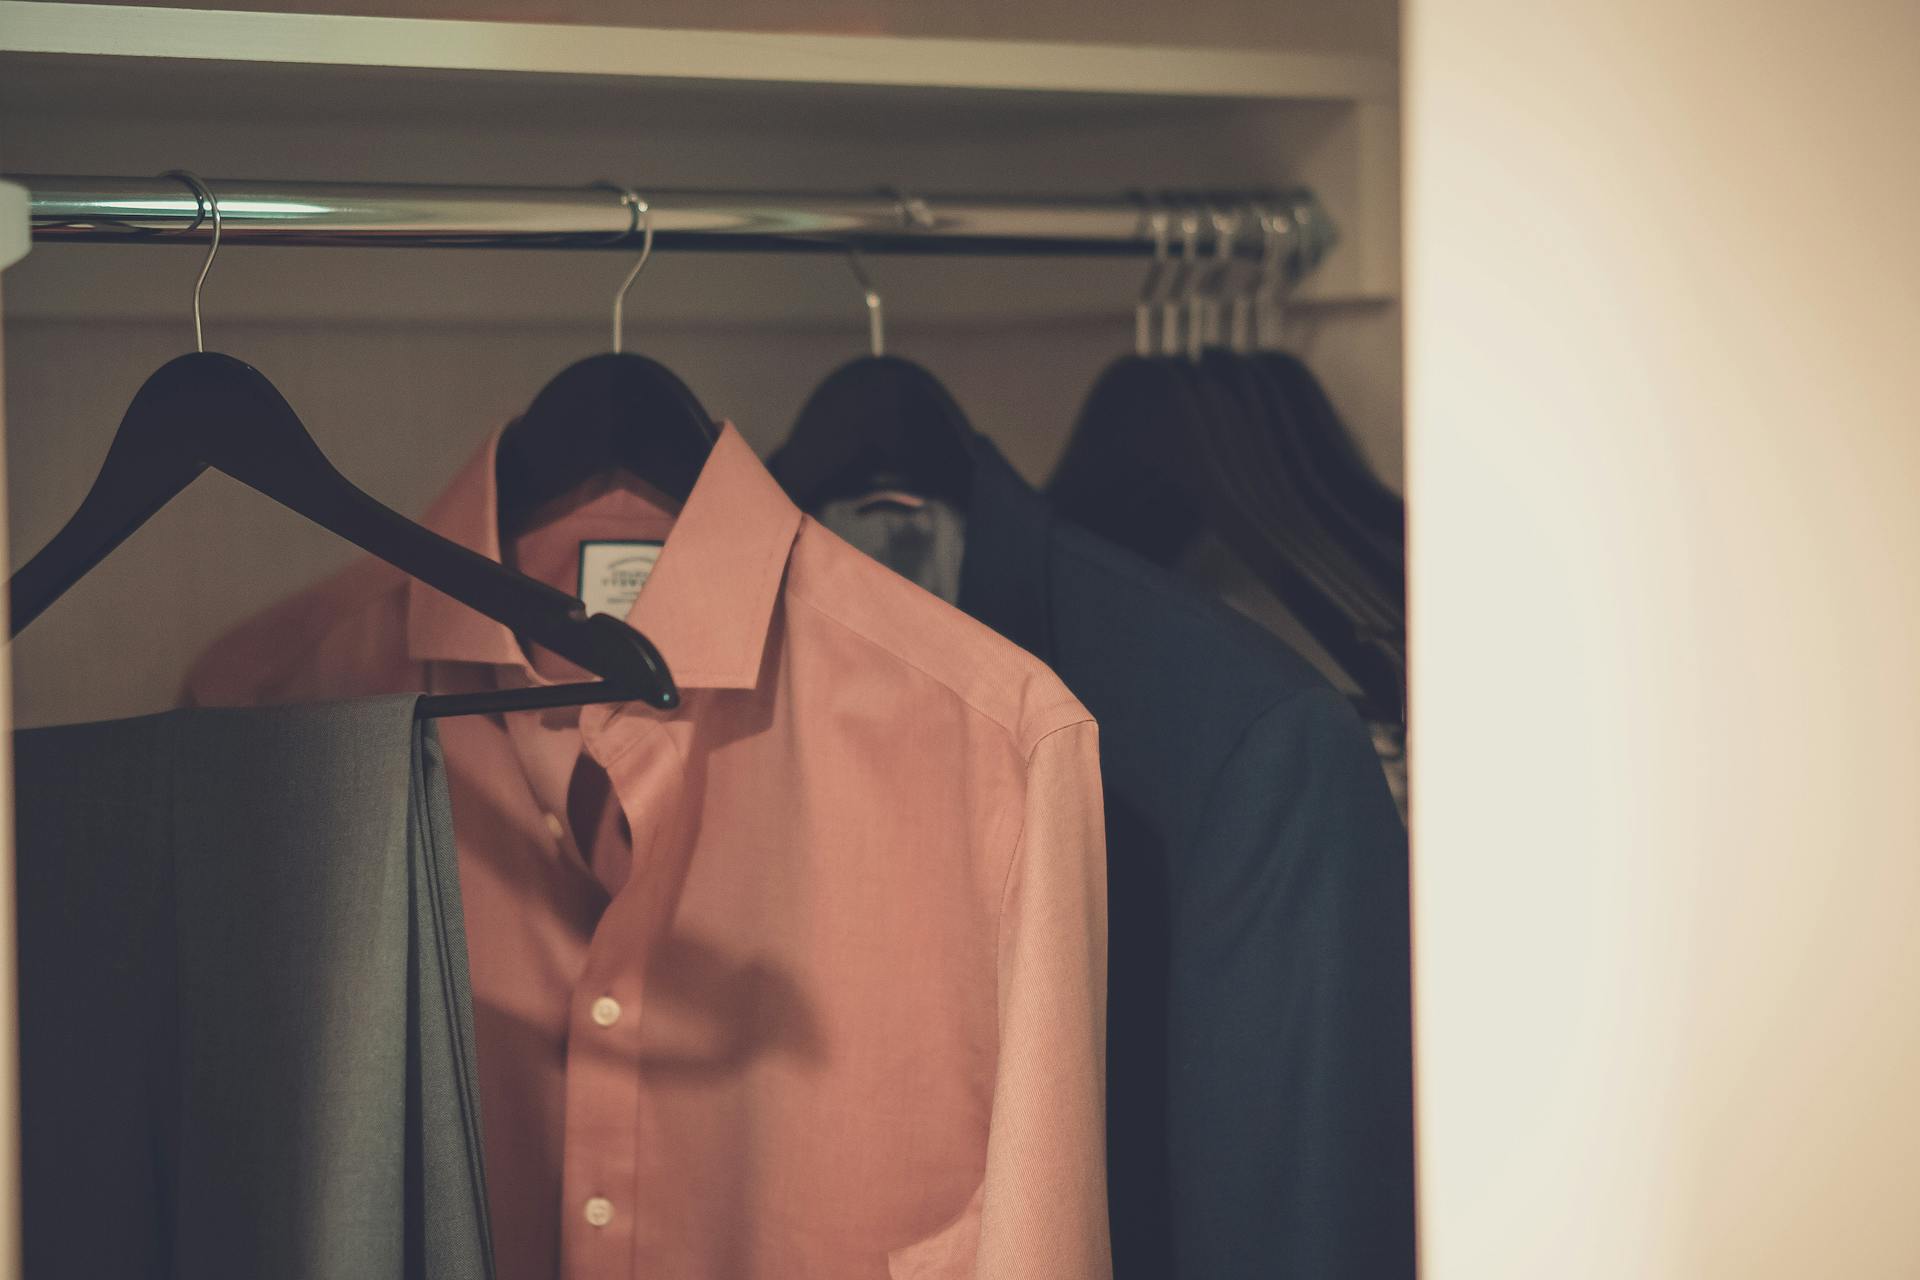 Clothes hanging in a closet | Source: Pexels